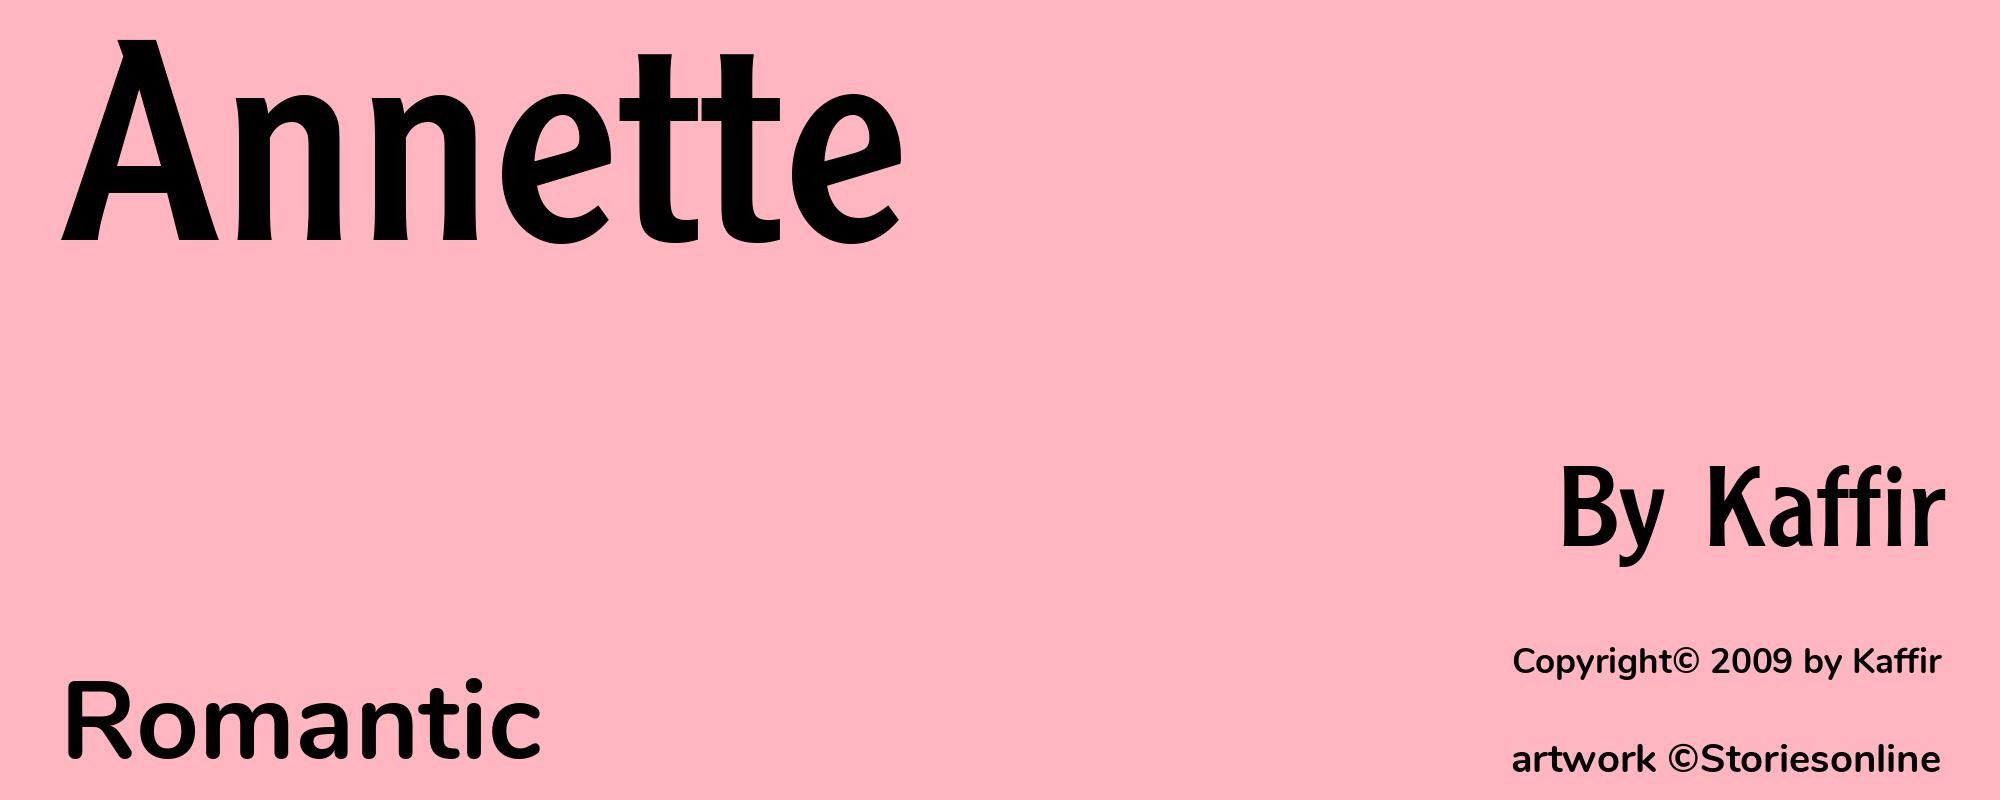 Annette - Cover